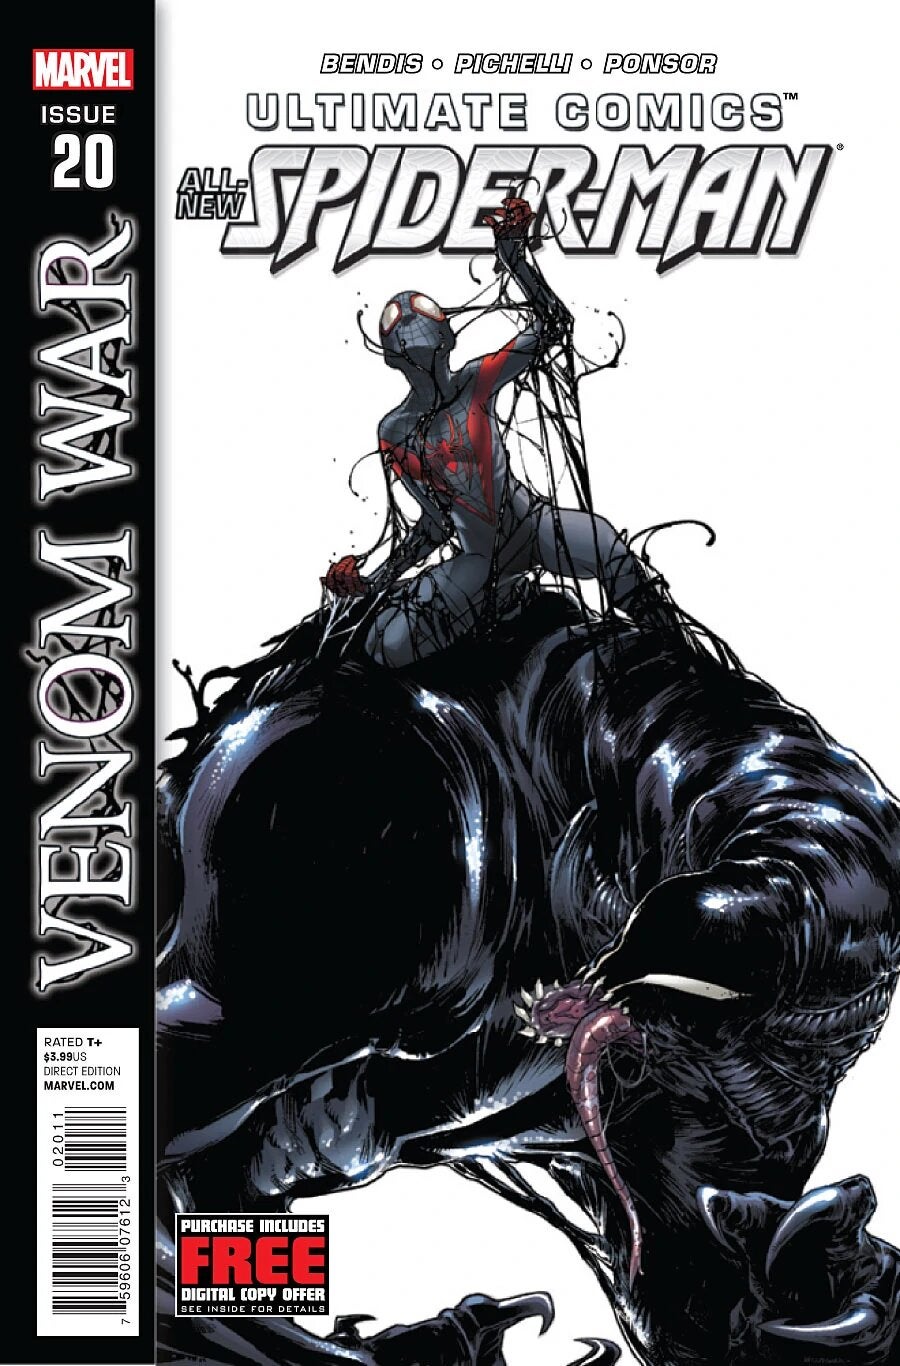 Cover of Ultimate Comics Spiderman featuring Miles Morales fighting Venom